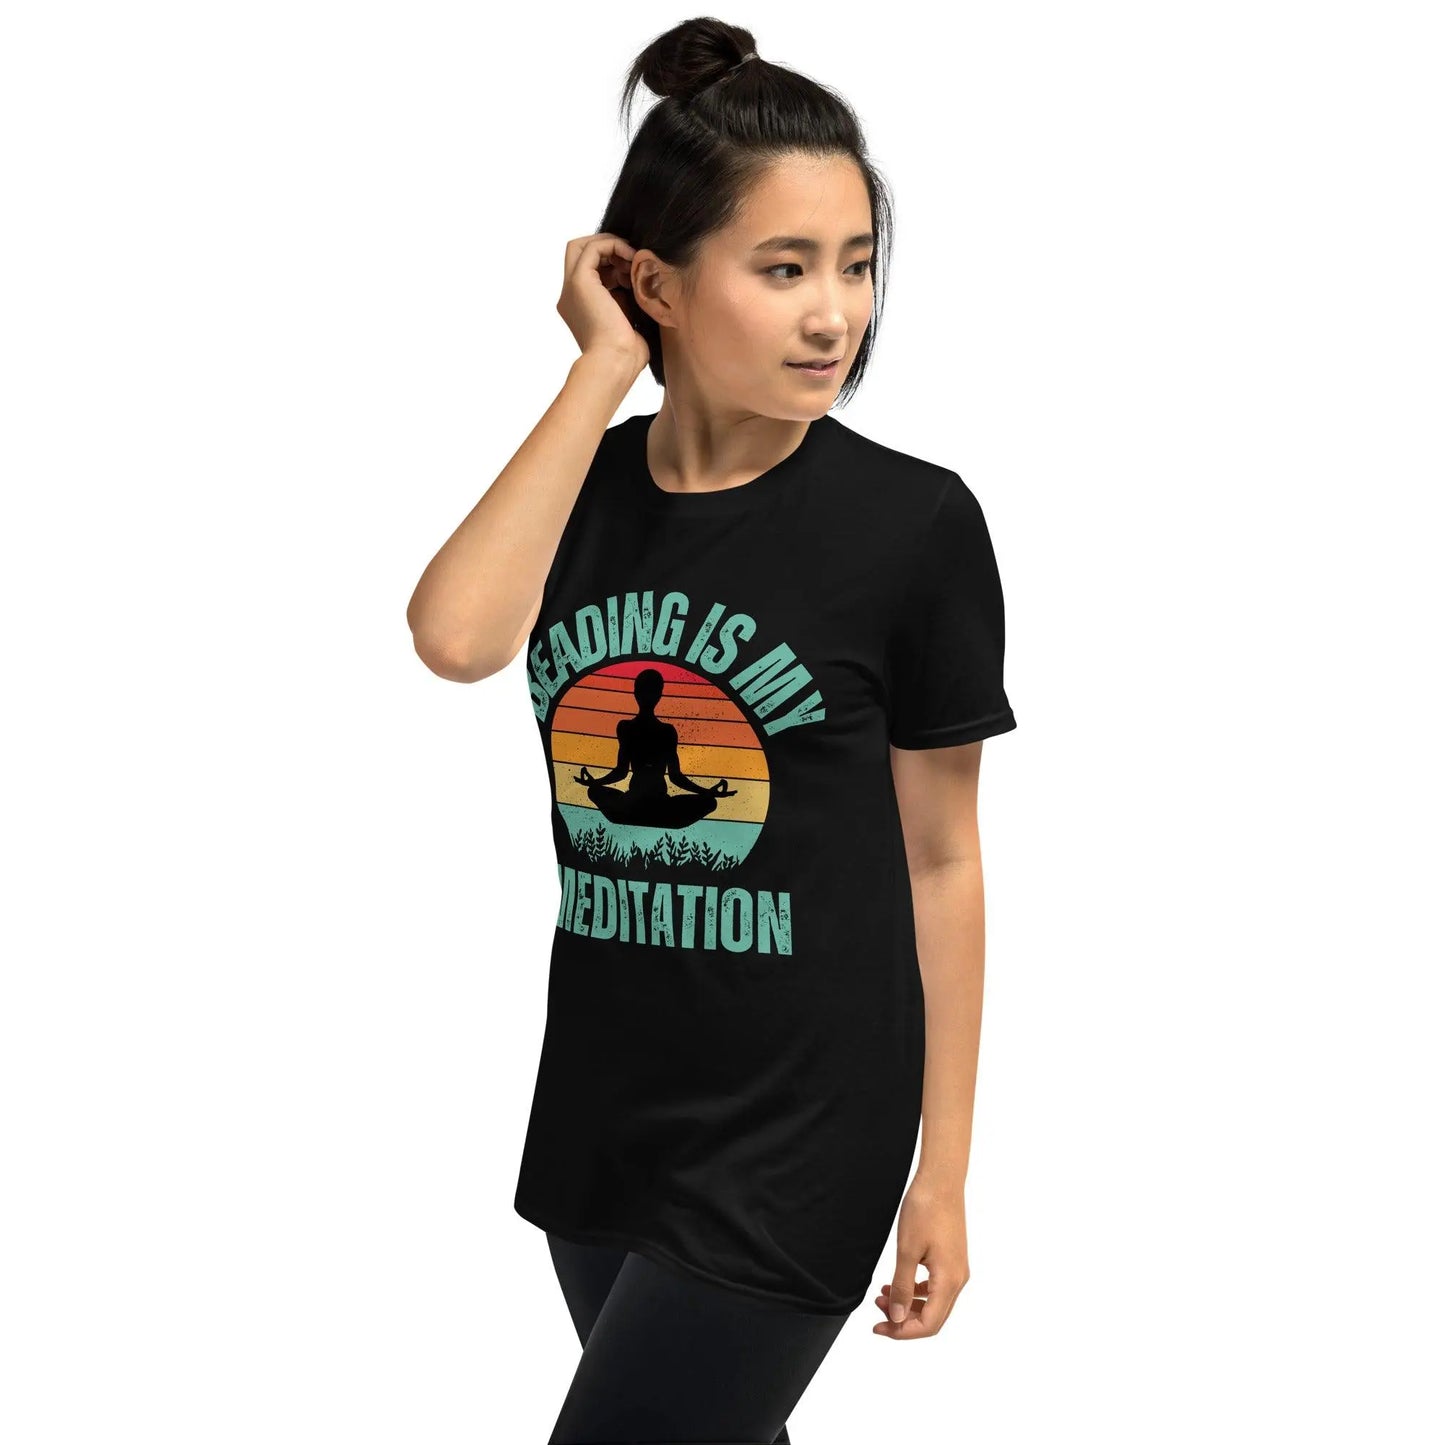 "Beading is My Meditation" Retro Short-Sleeve Unisex T-Shirt - NikoBeadsUA